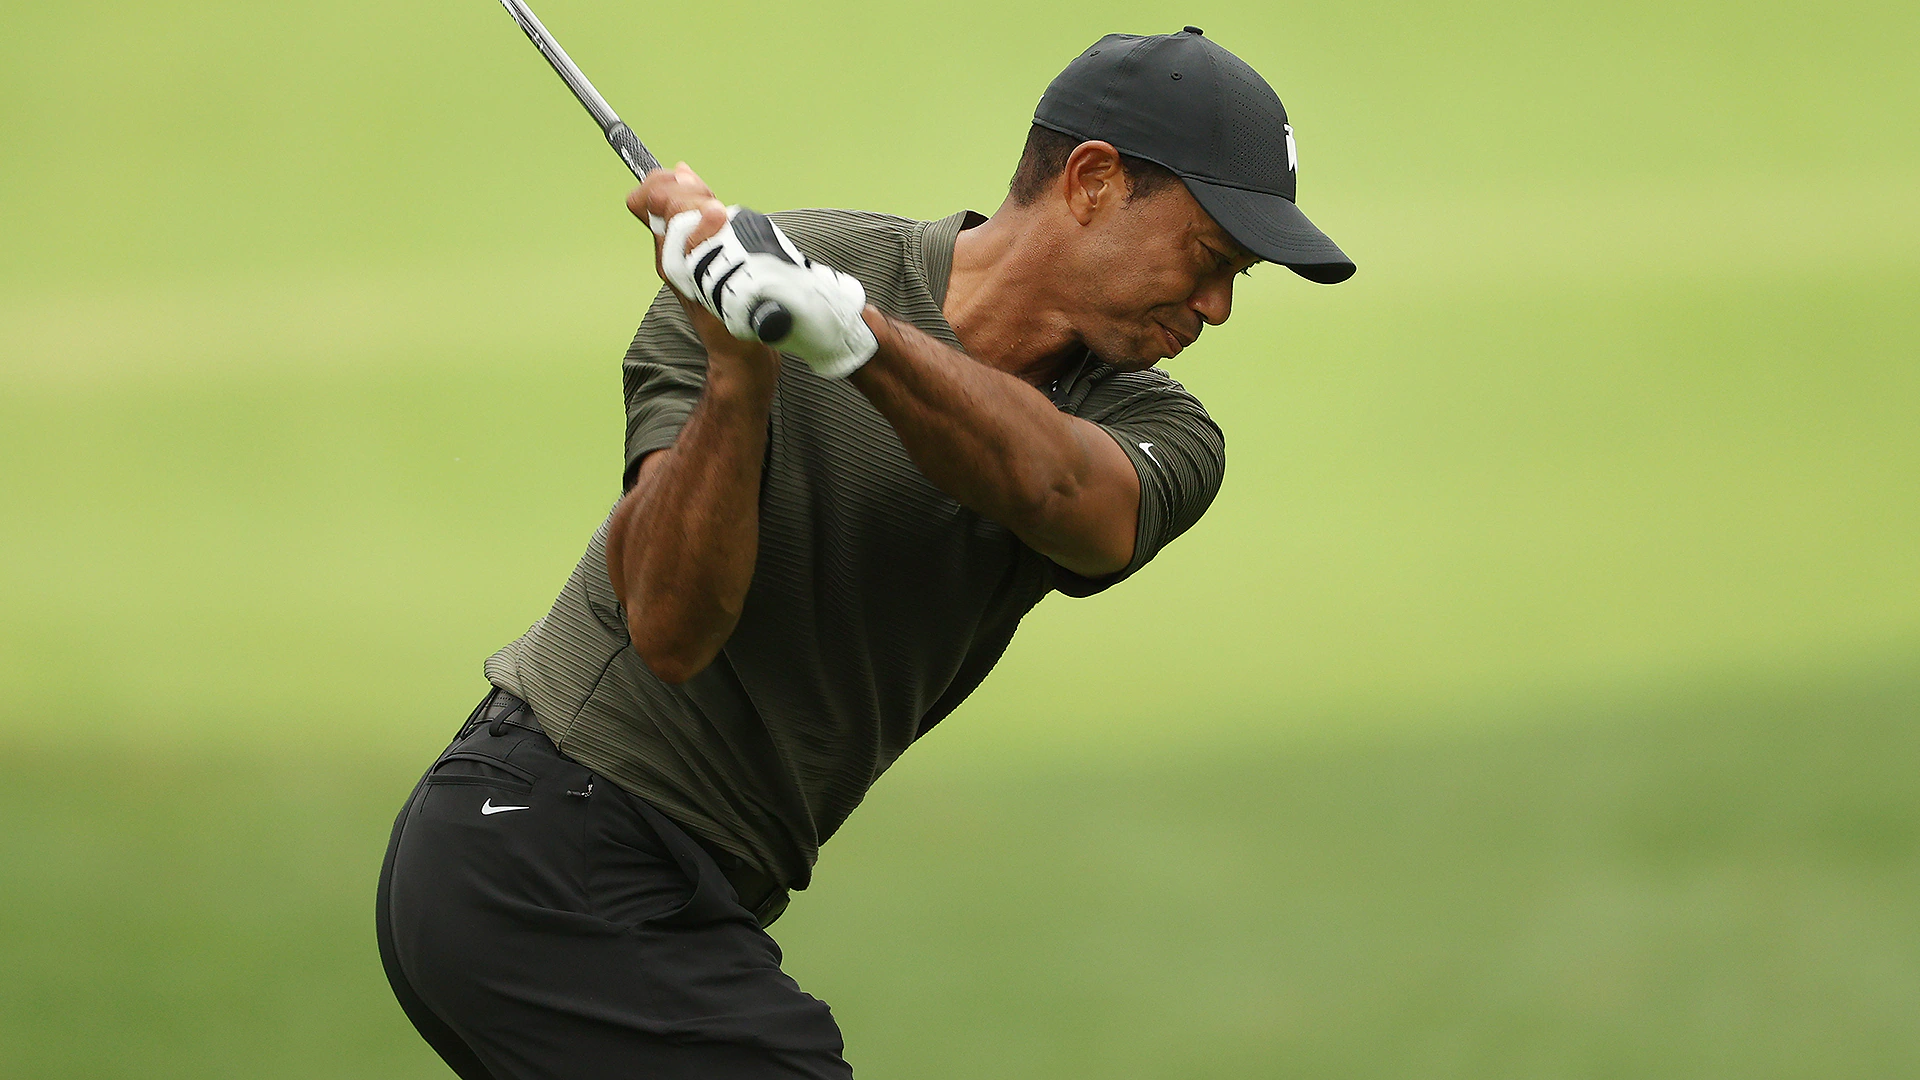 ‘Making progress’: Tiger Woods posts video of himself hitting full golf shot